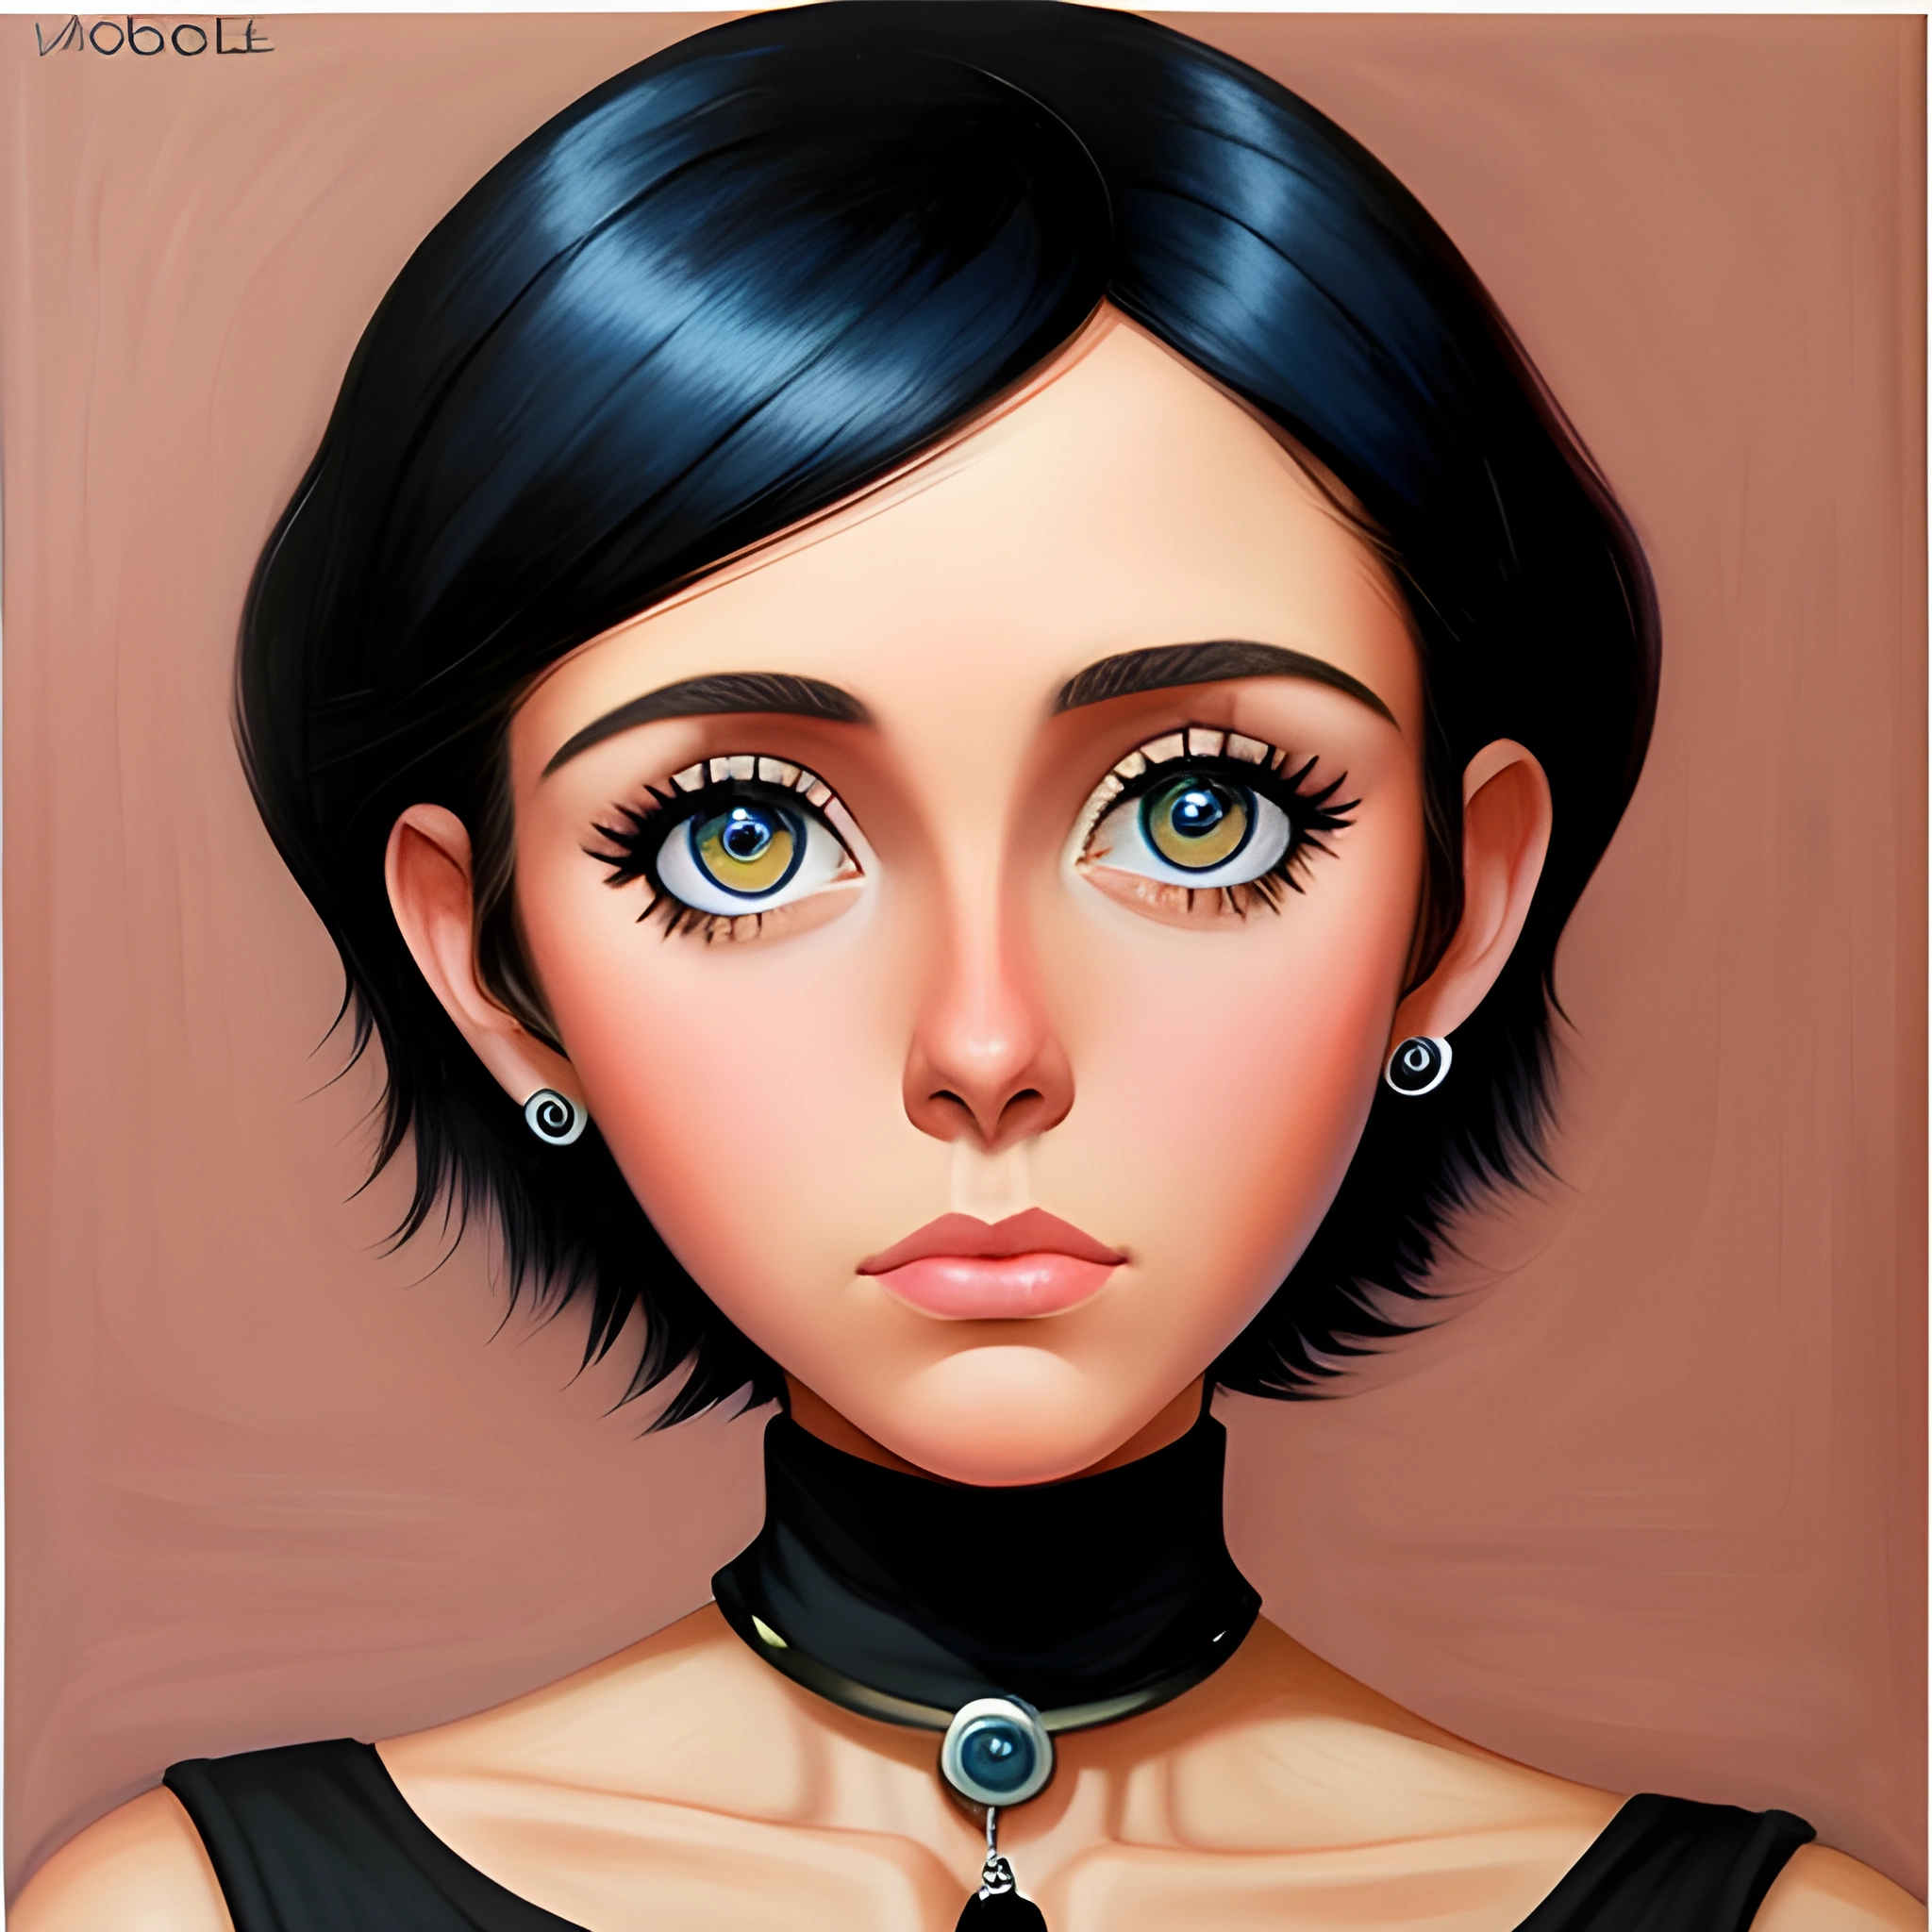 cartoon girl with black hair and blue eyes wearing a choke